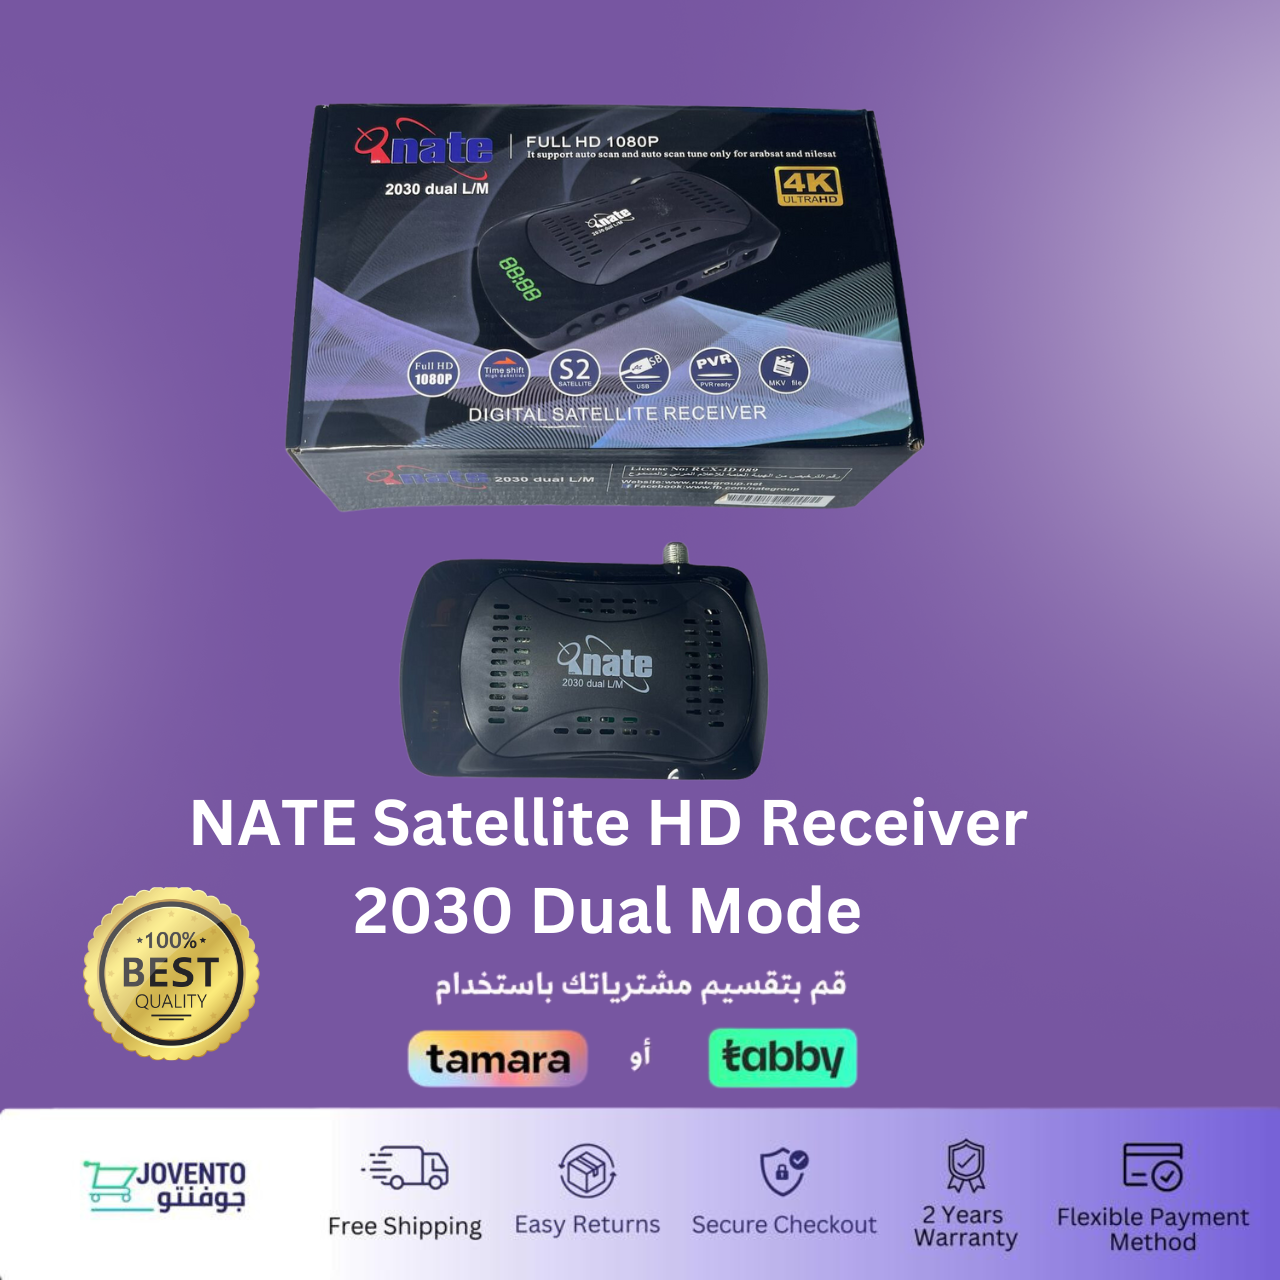 NATE Satellite HD Receiver 2030 Dual Model